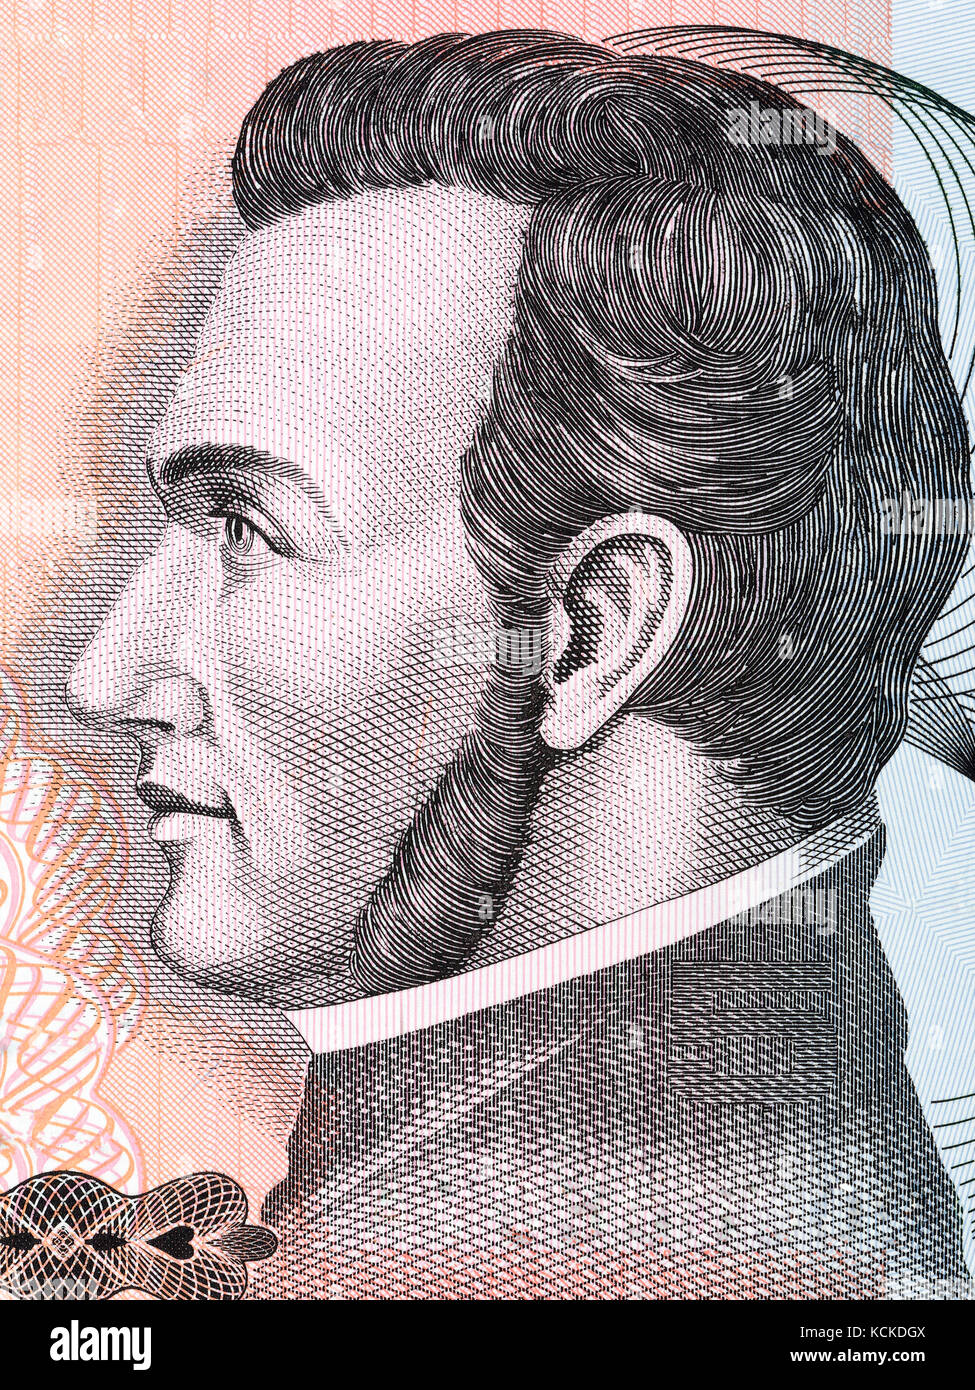 Francisco Morazan portrait from Honduran money Stock Photo